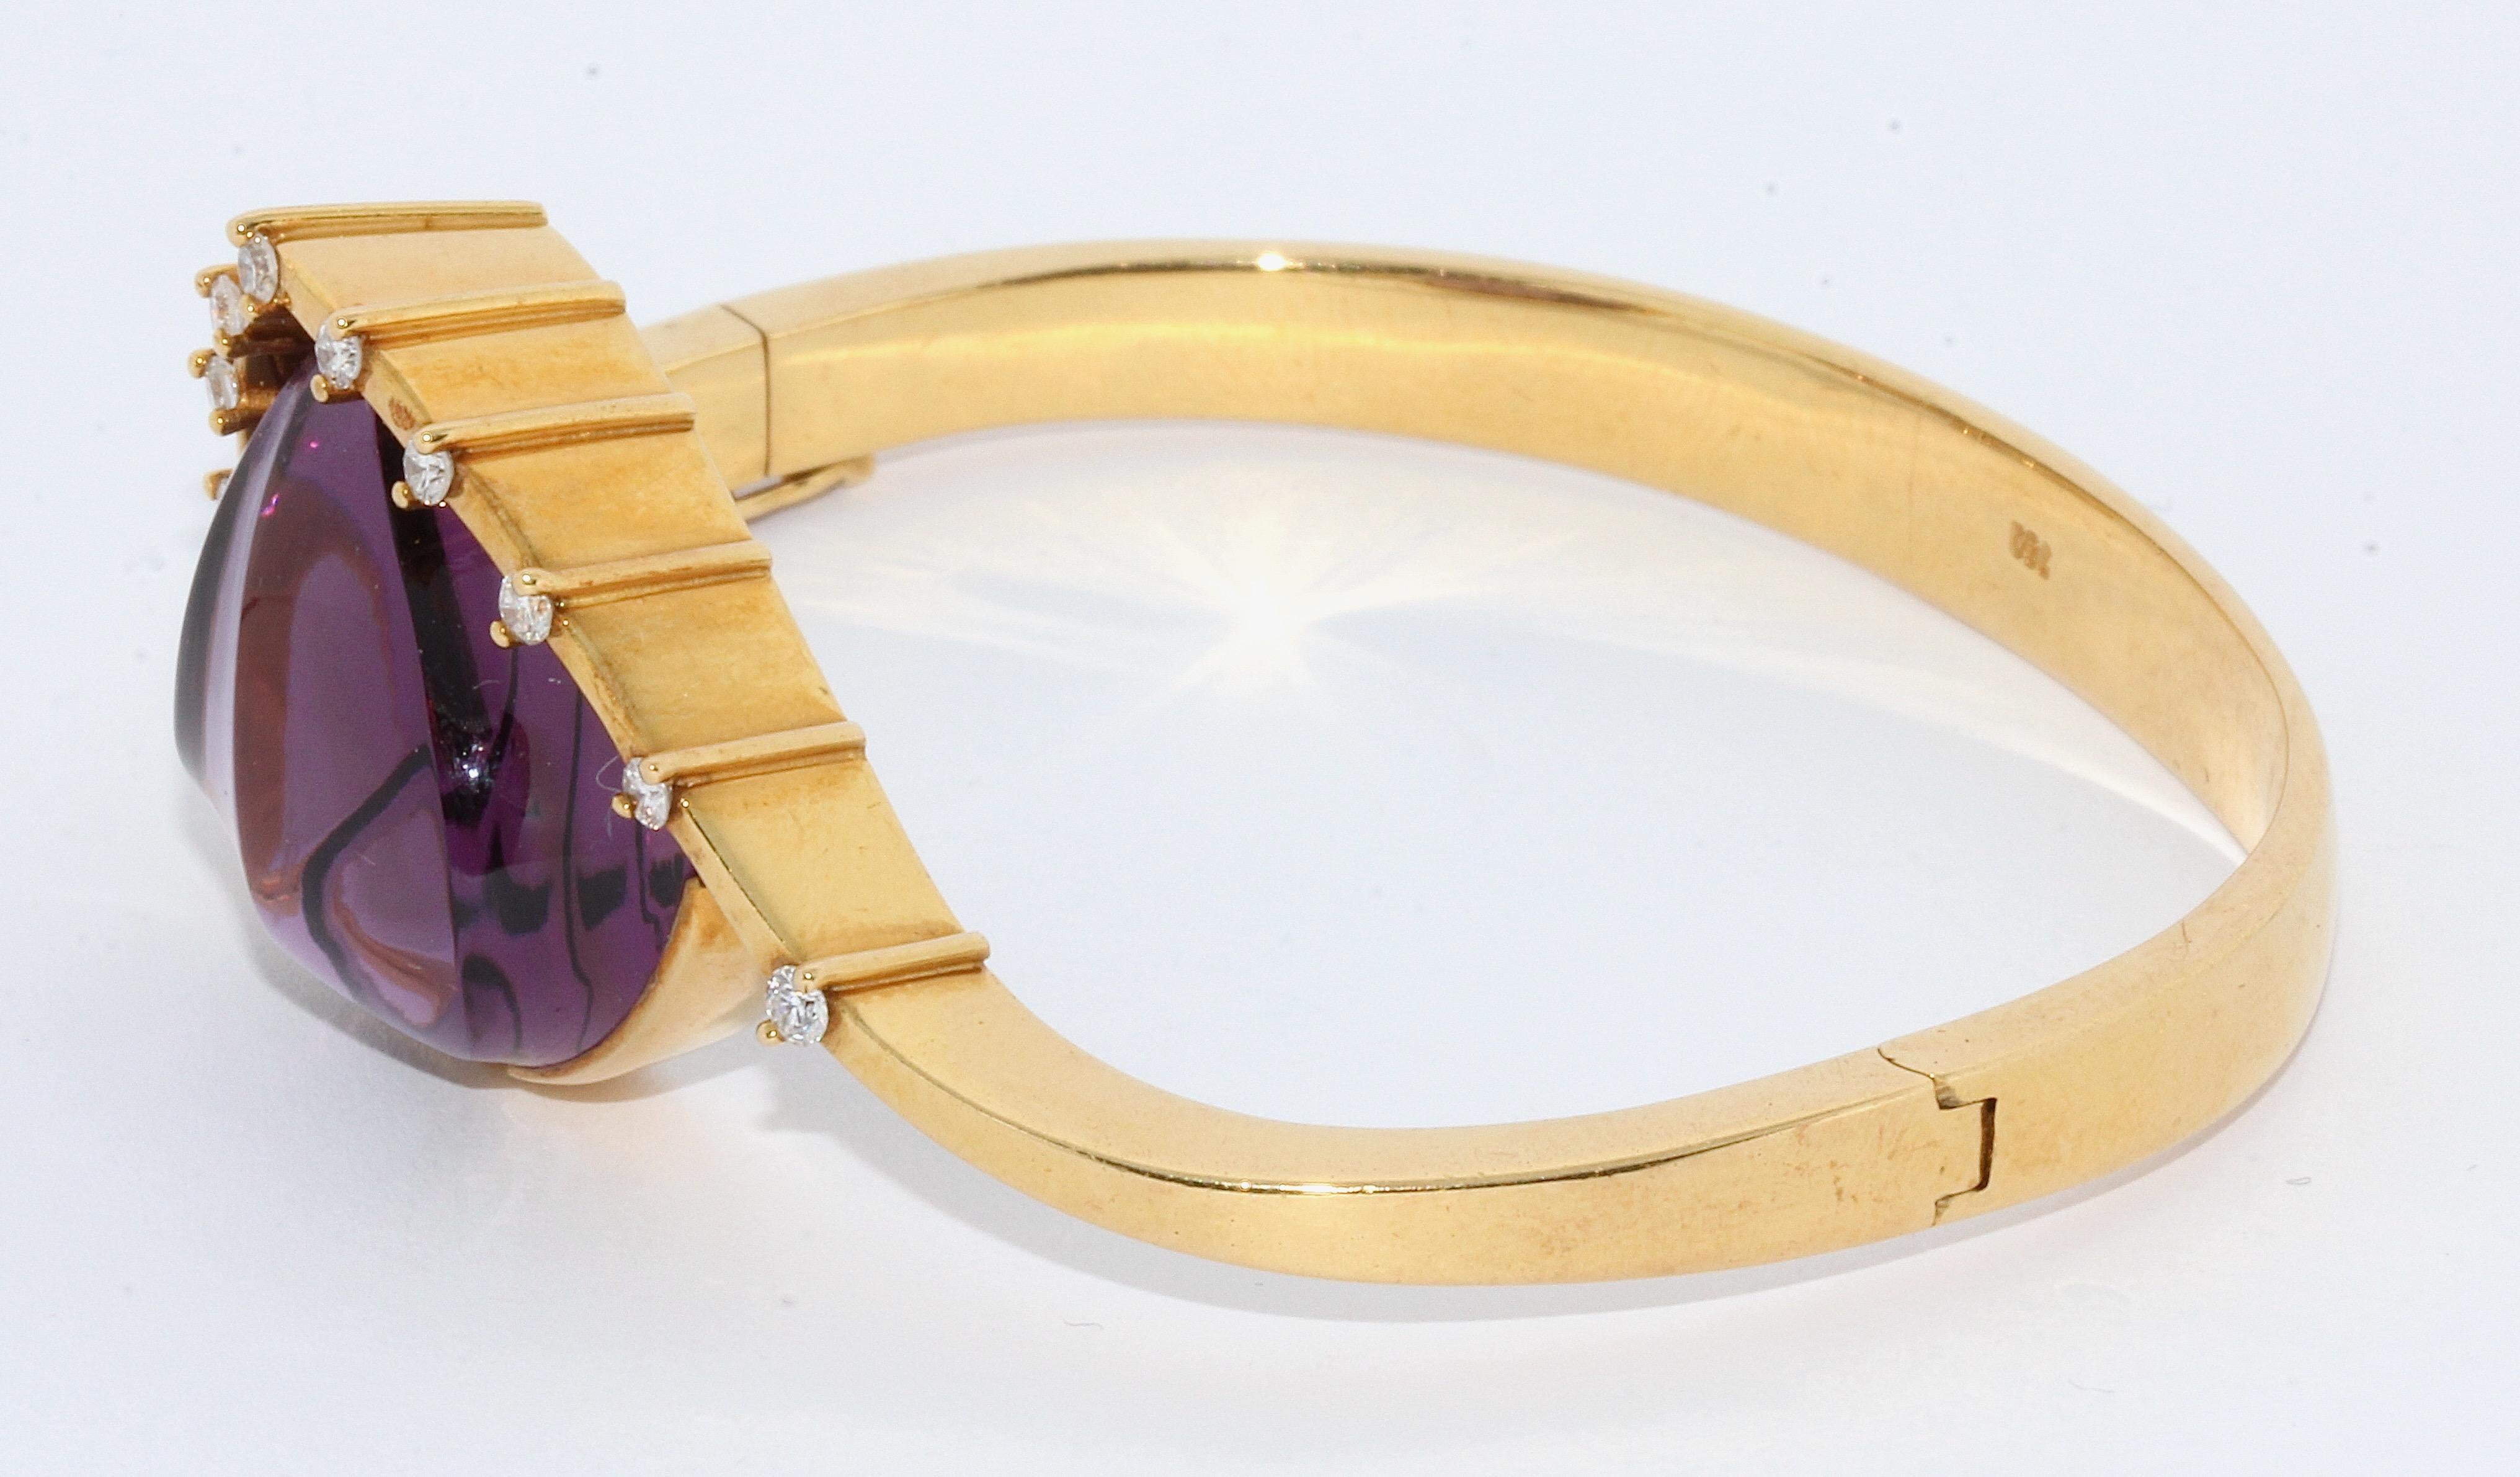 Women's 18 Karat Gold Bangle, Bracelet, Set with Large Amethyst and Diamonds. Cadeaux. For Sale